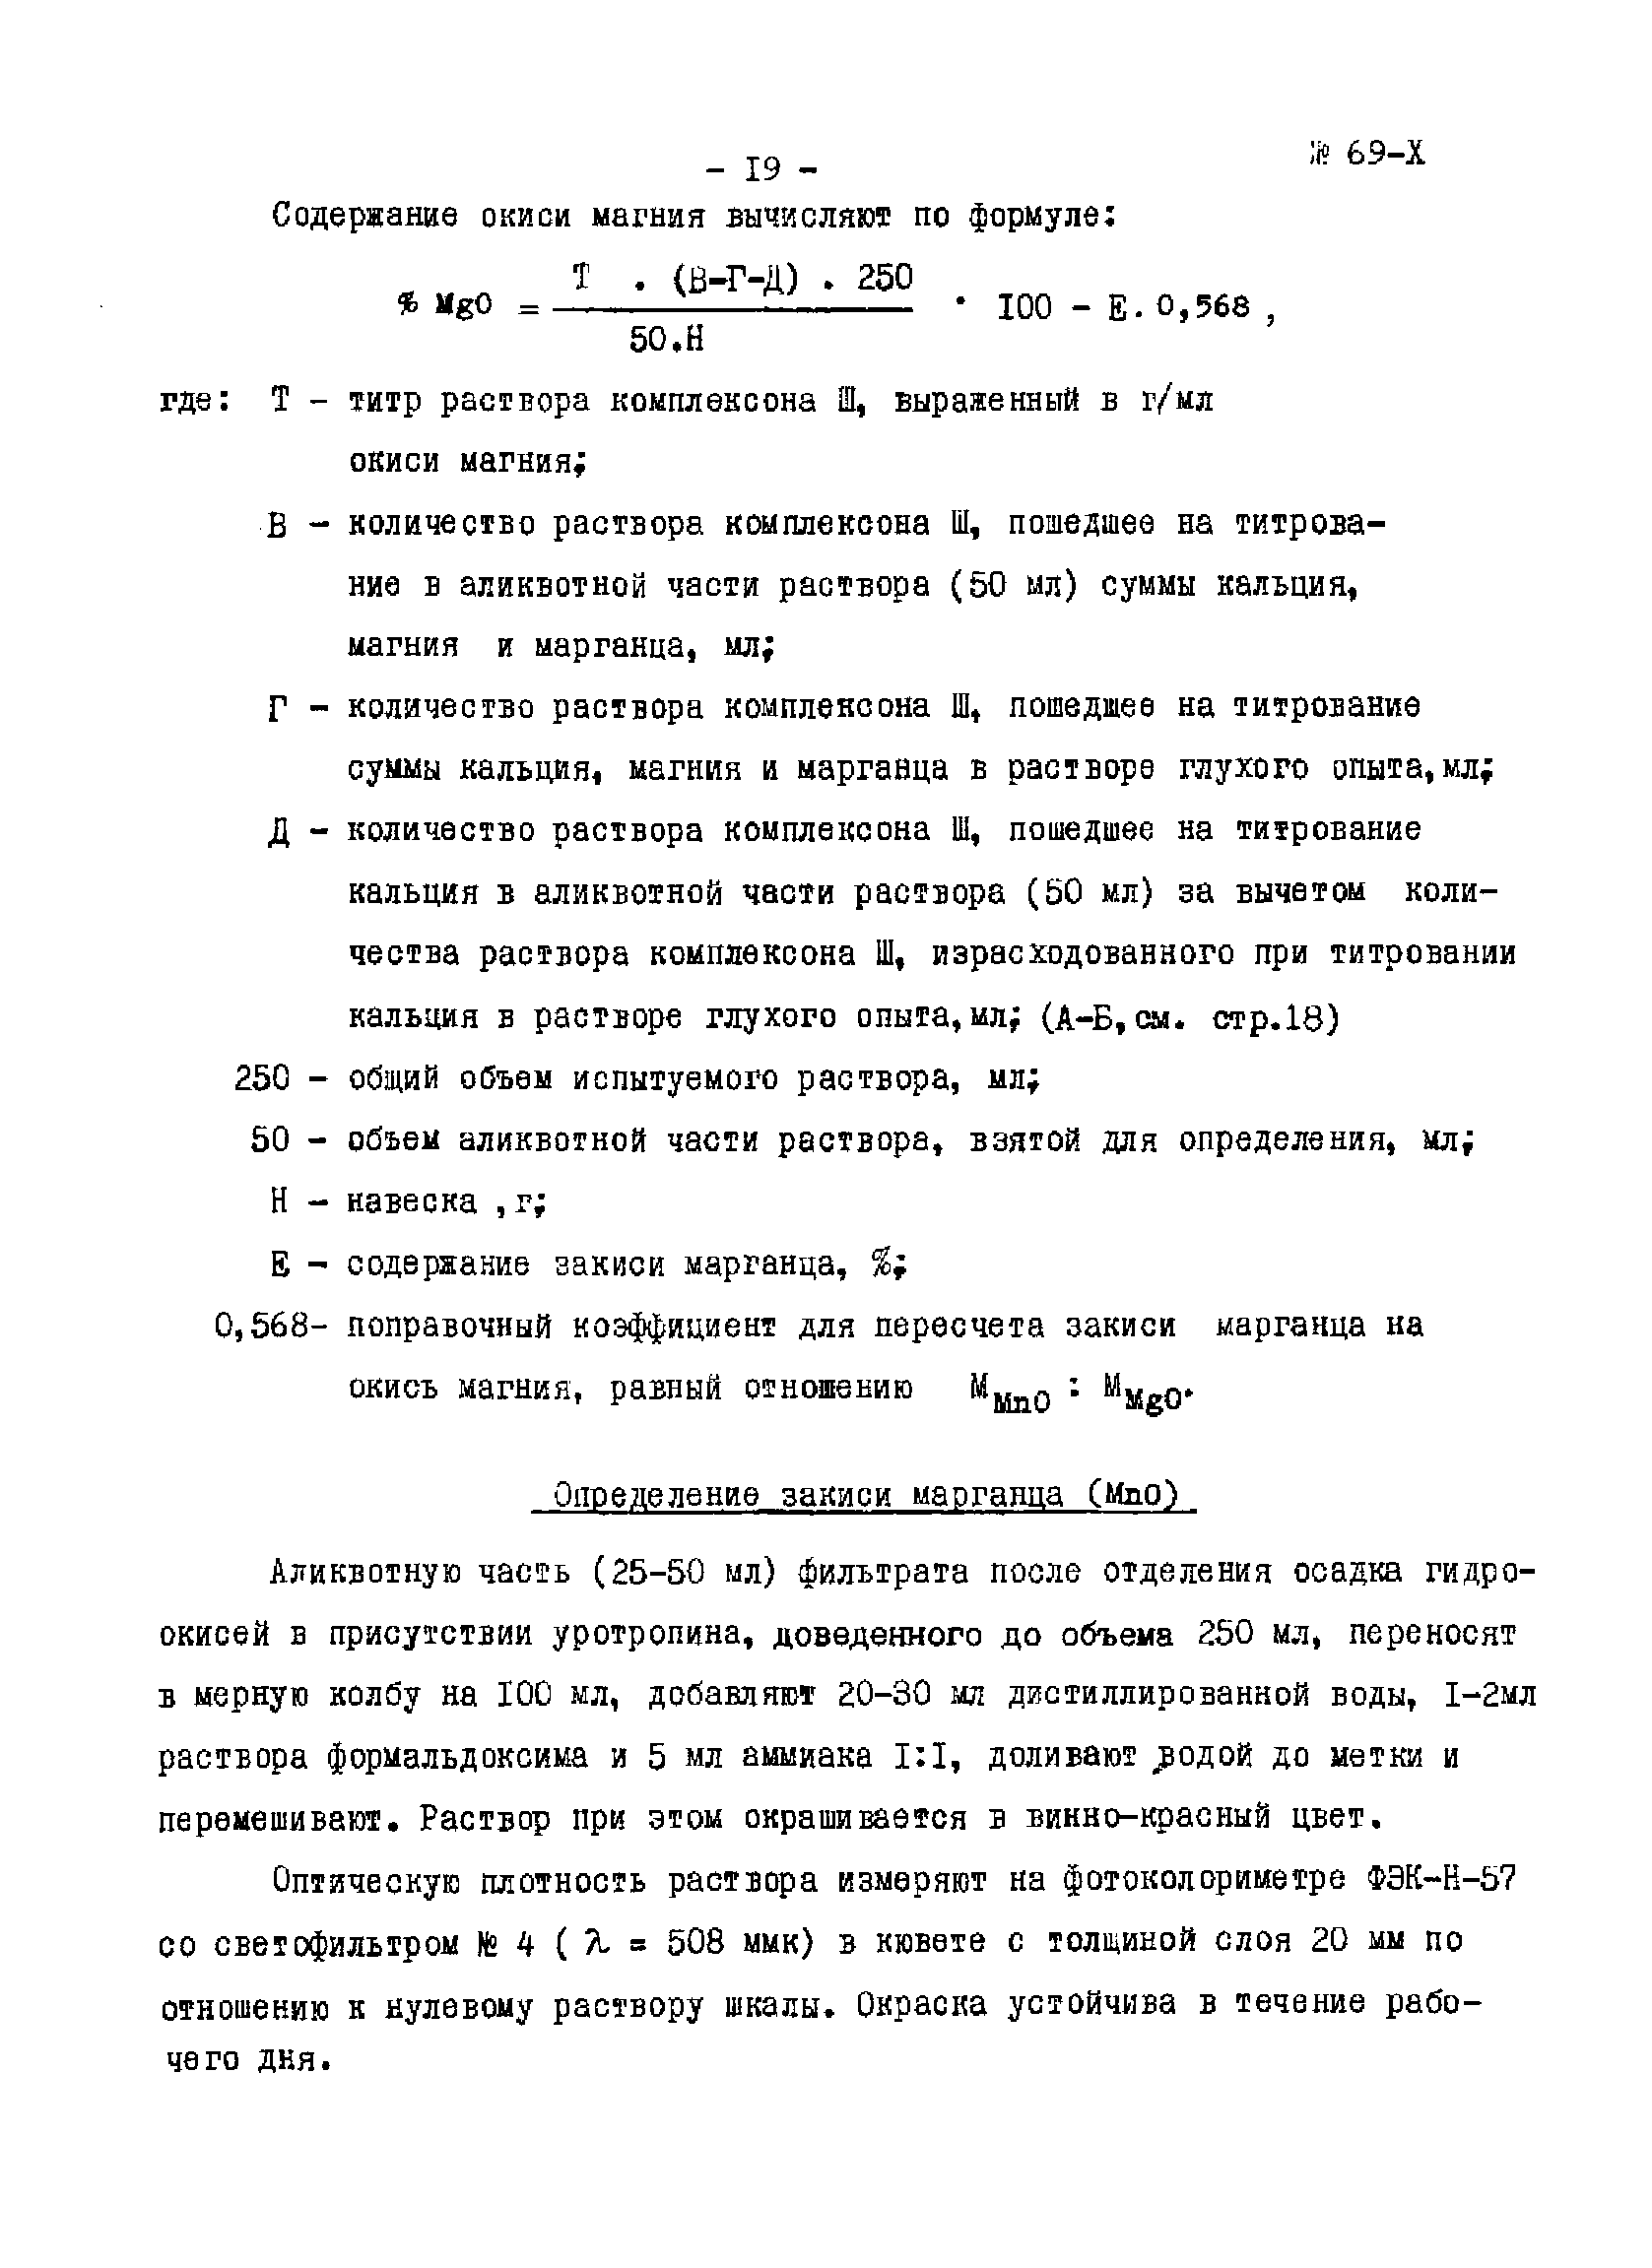 Инструкция НСАМ 69-Х